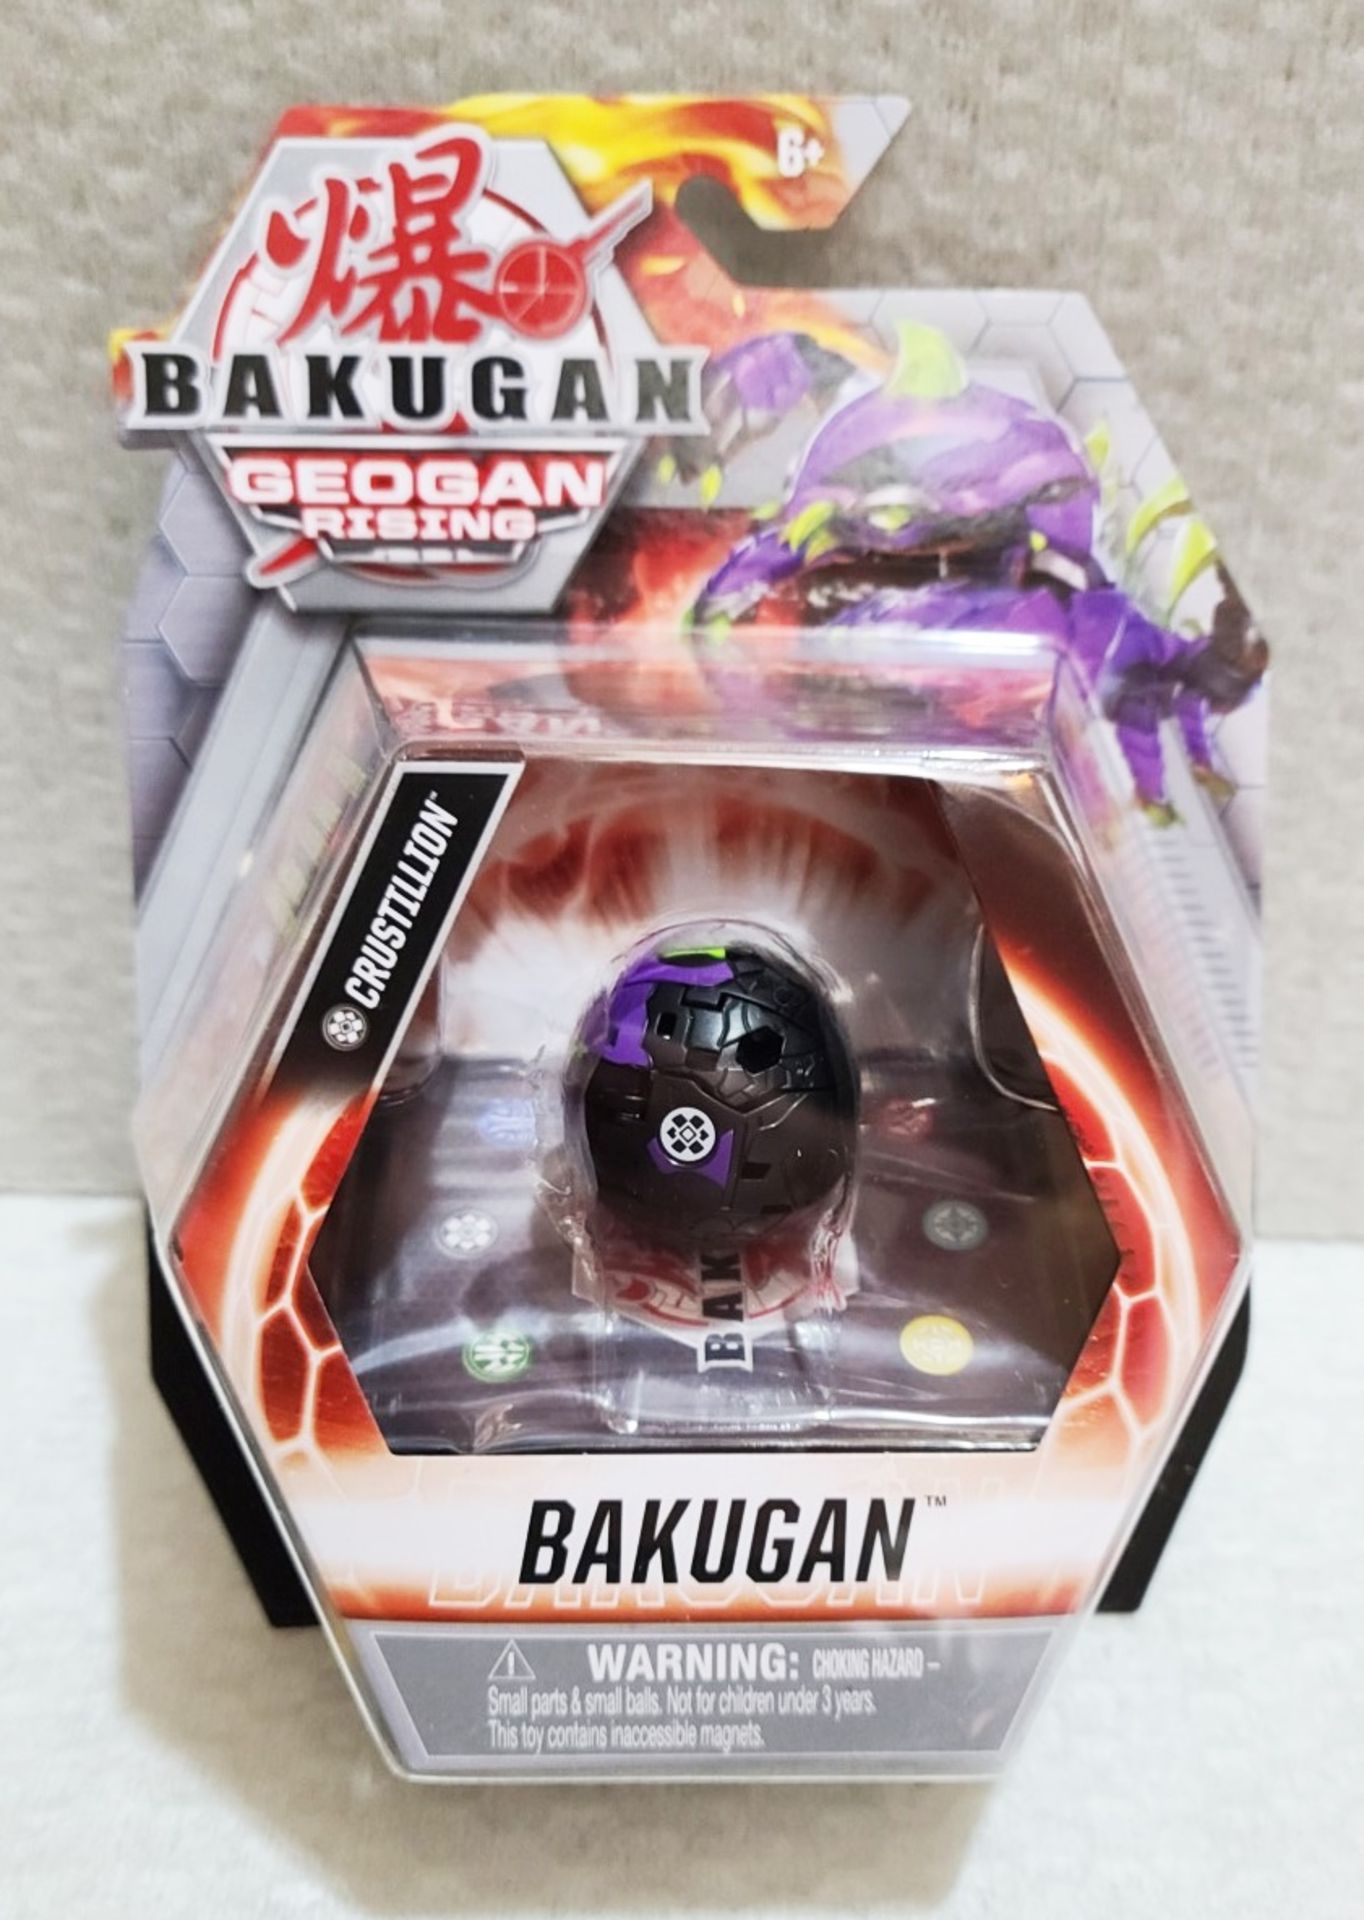 1 x BAKUGAN Bakugan Geogan Rising - Crustillion Core Collectible Action Figure